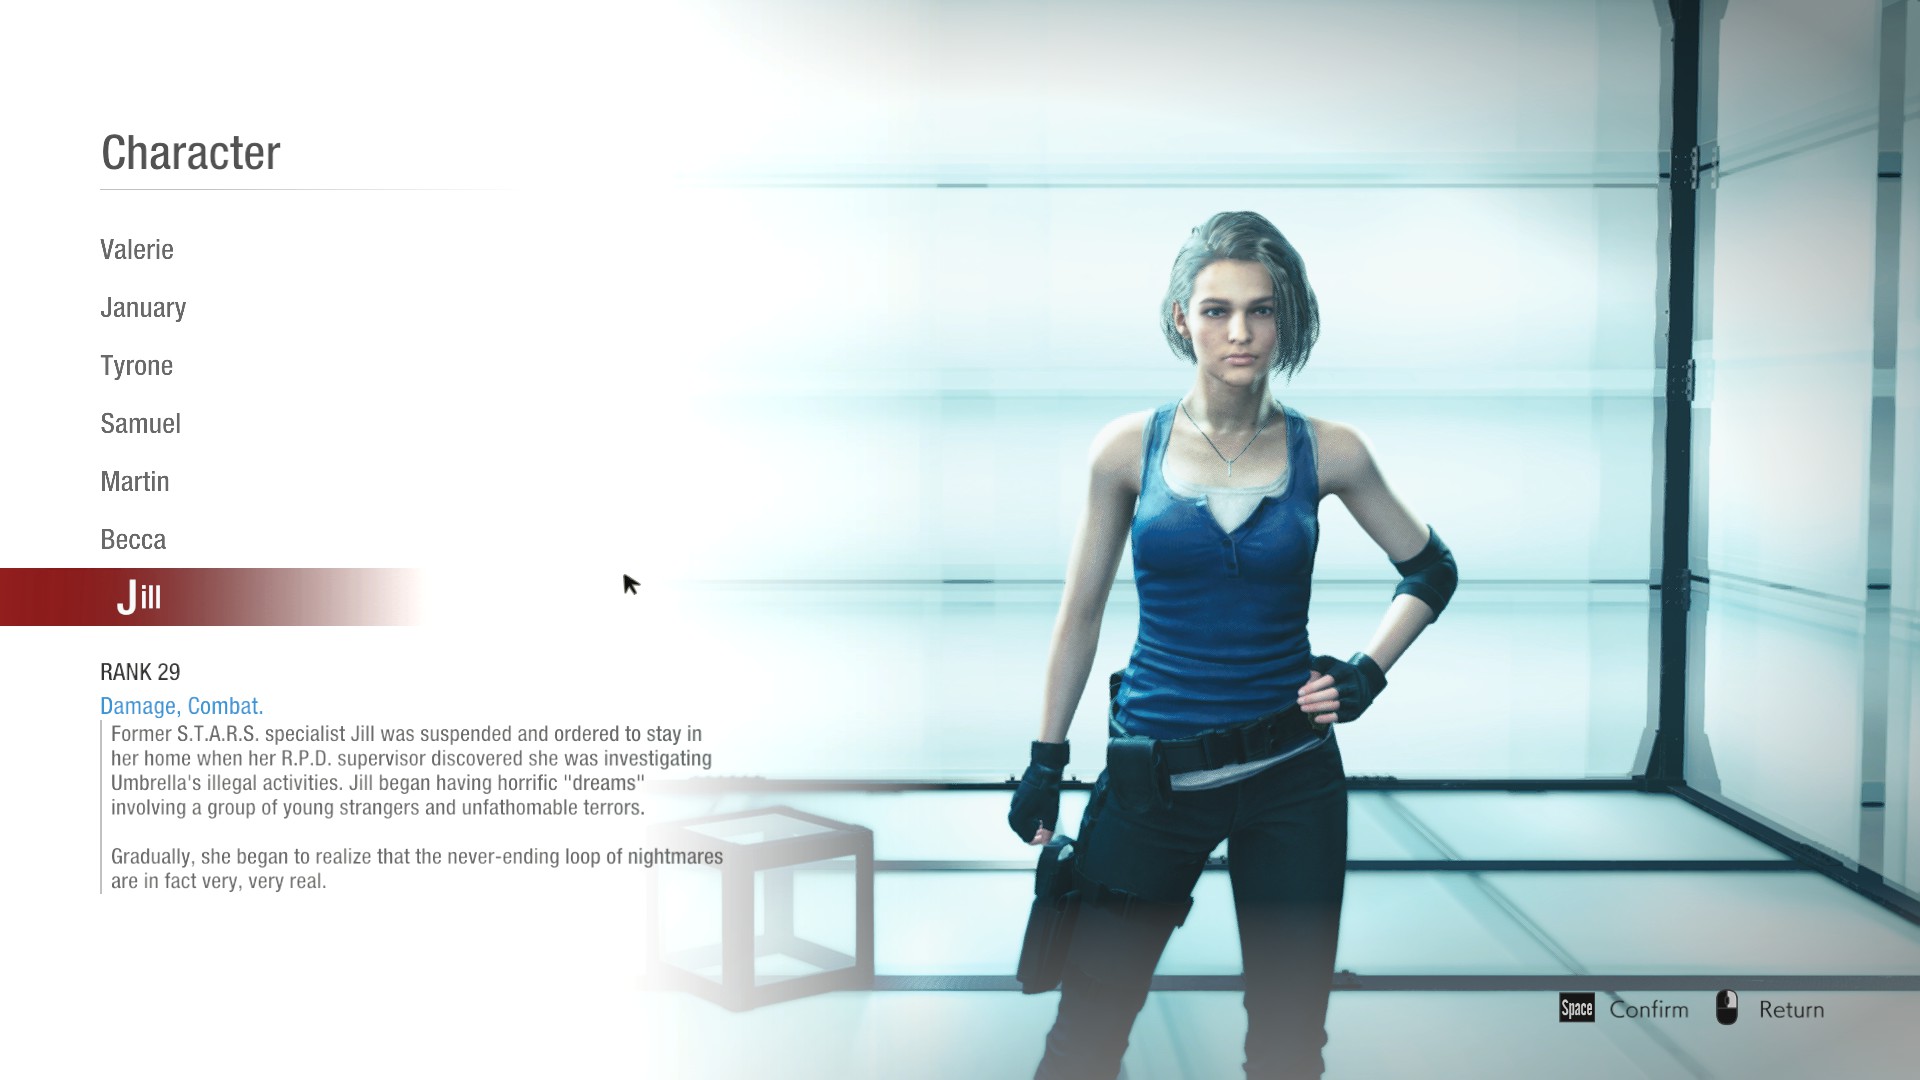 New Survivor: Jill  Resident Evil Resistance Official Web Manual